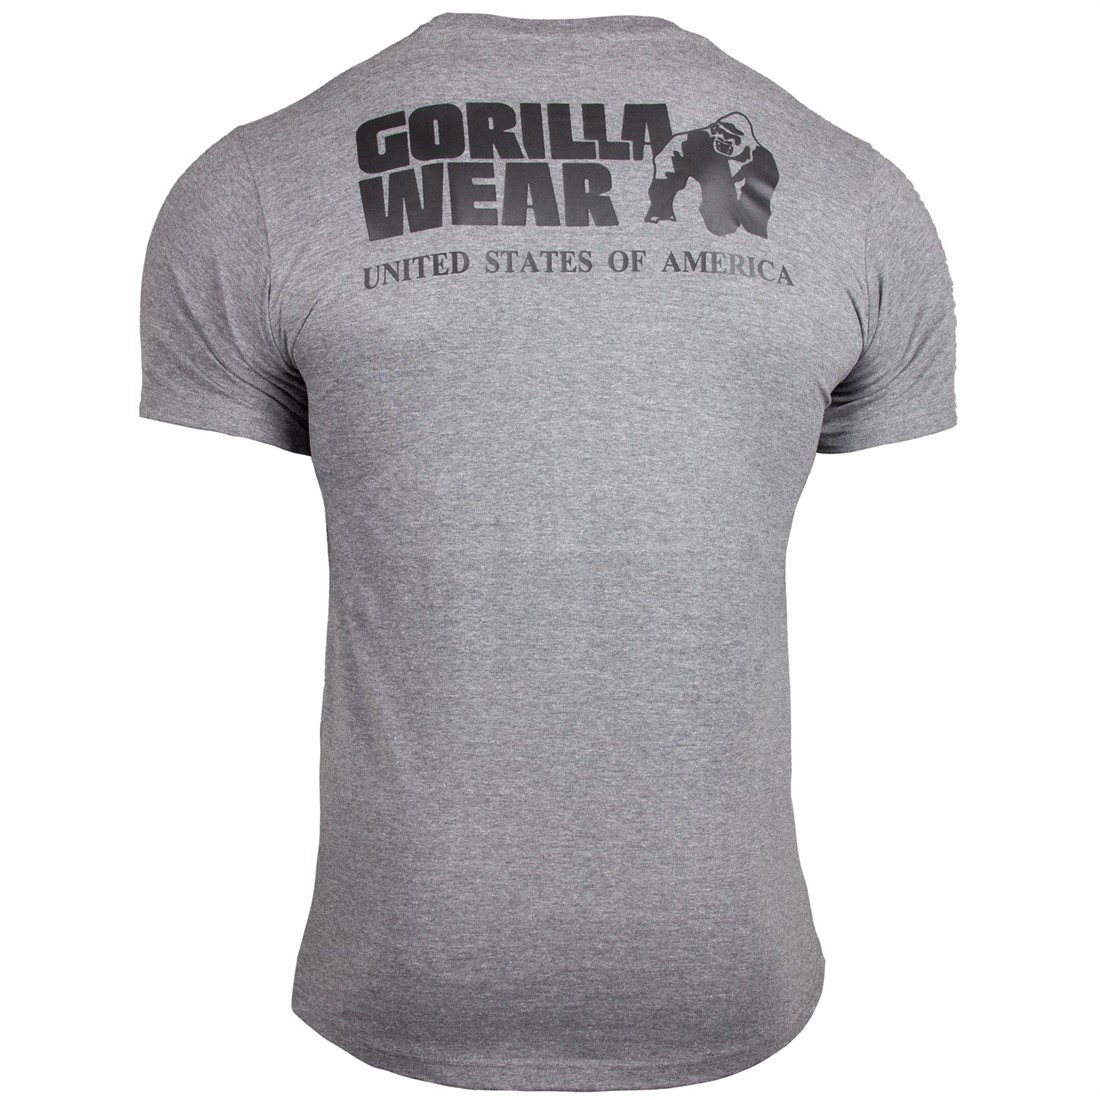 gorilla wear t shirt india